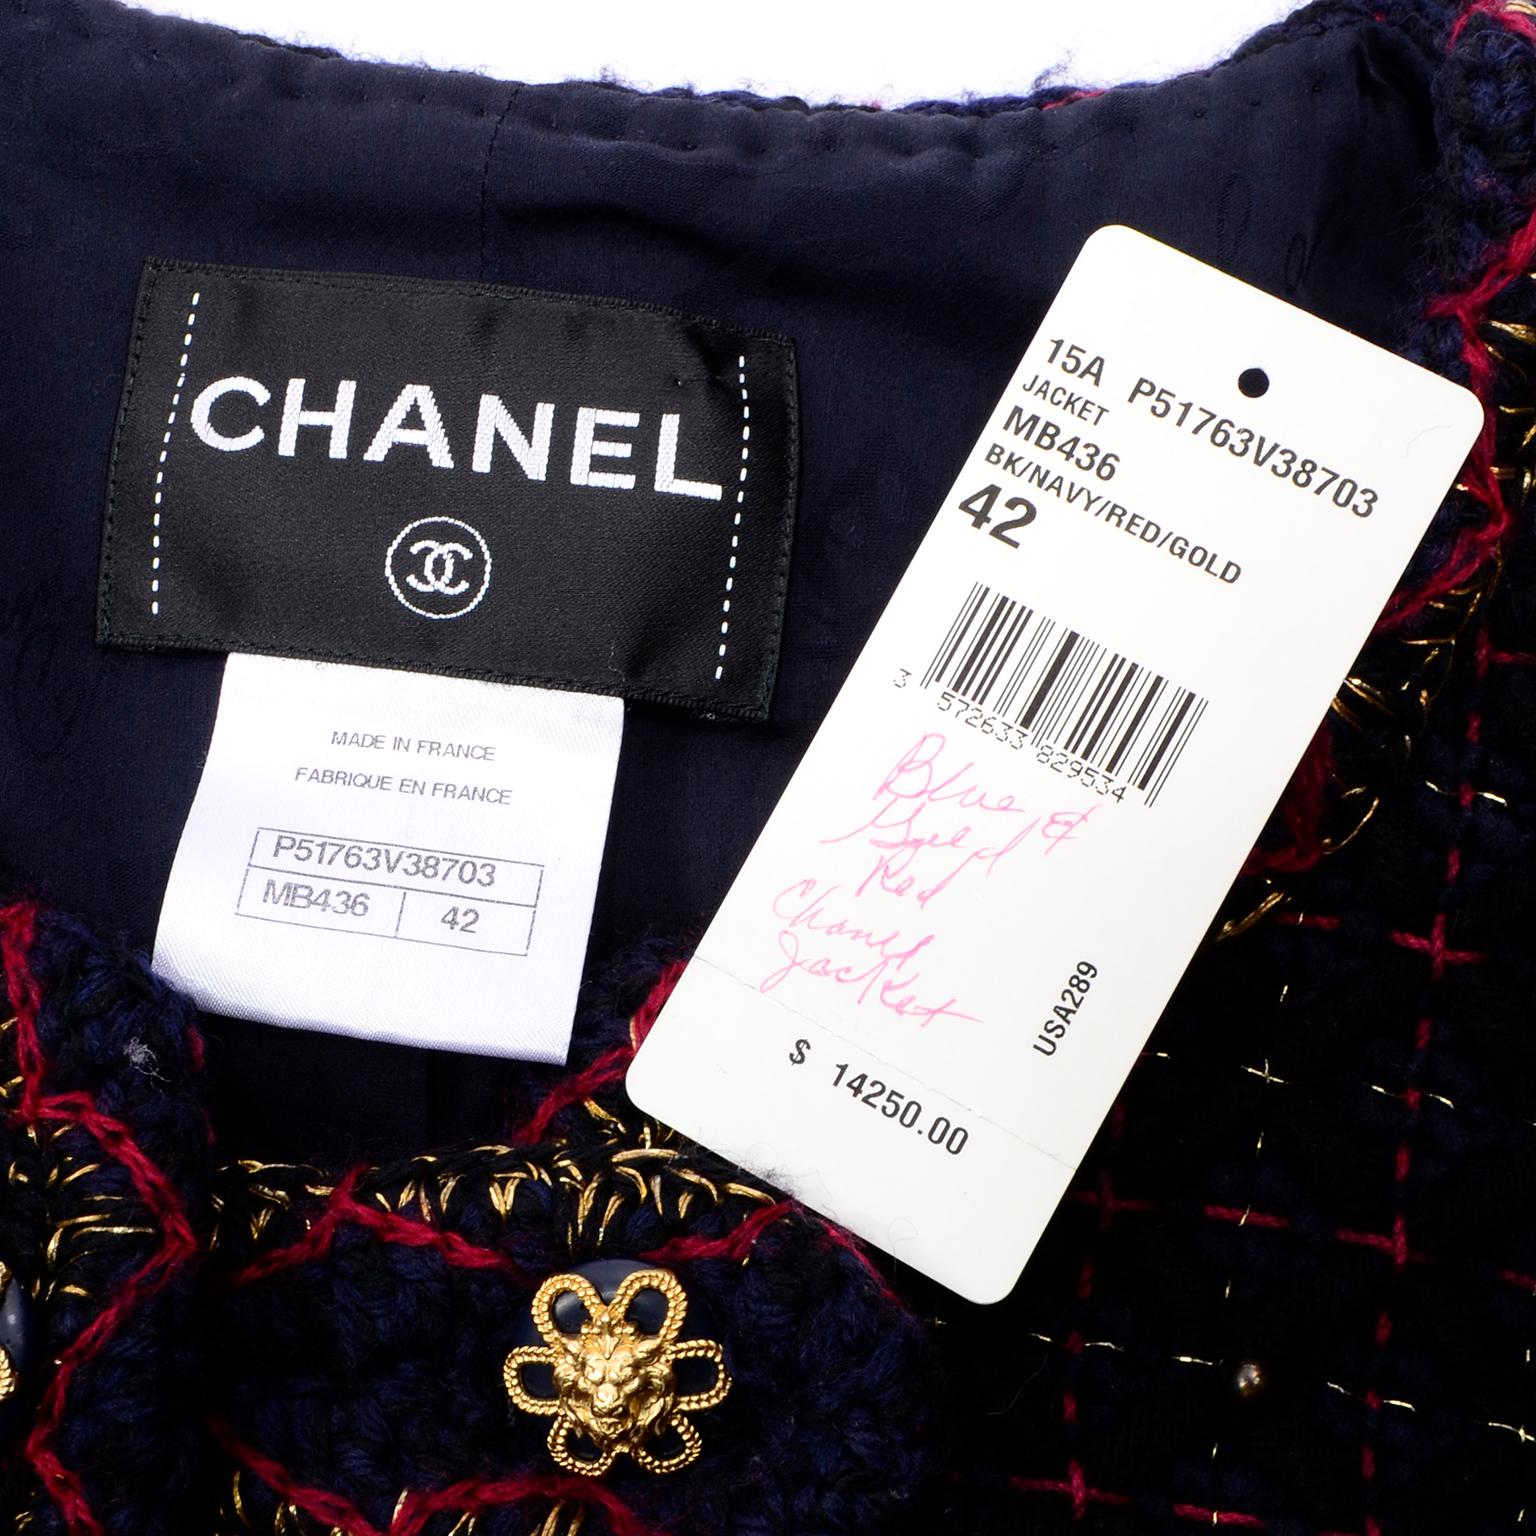 Chanel 2015 Paris Salzburg Collection $14250 Tweed Documented Runway Jacket 12